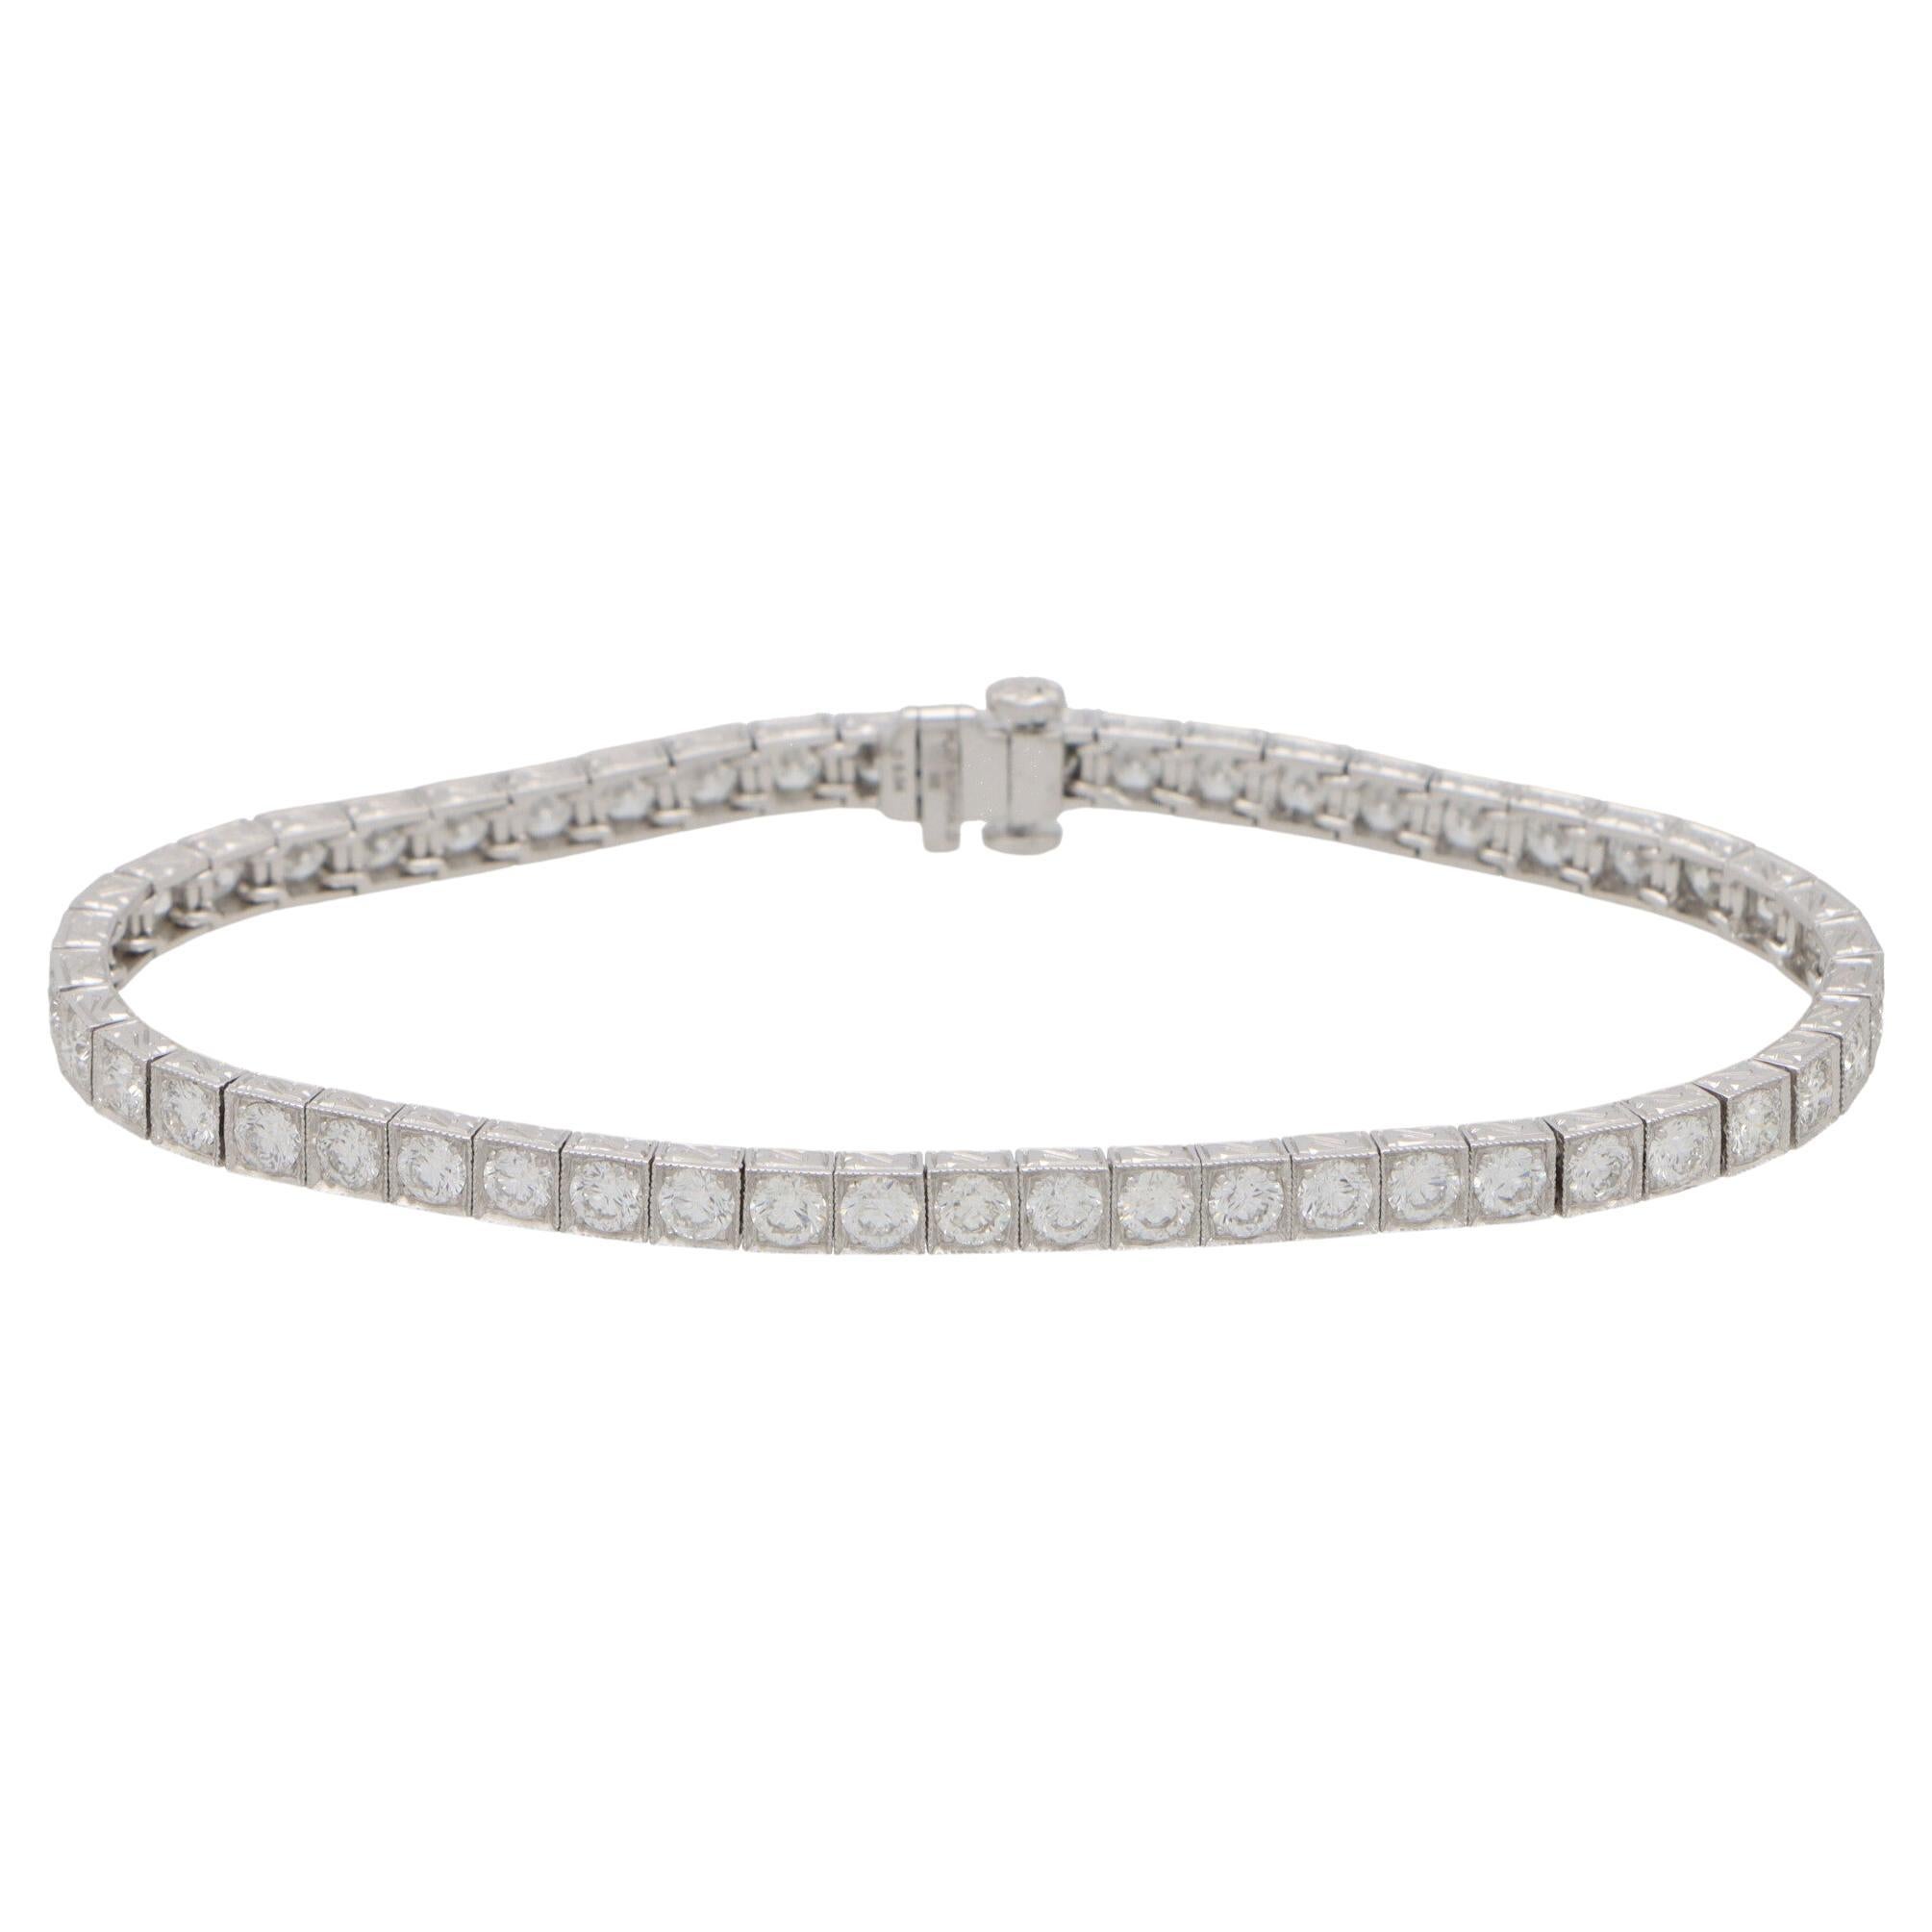 5.04 Carat Diamond Line Tennis Bracelet Set in Platinum